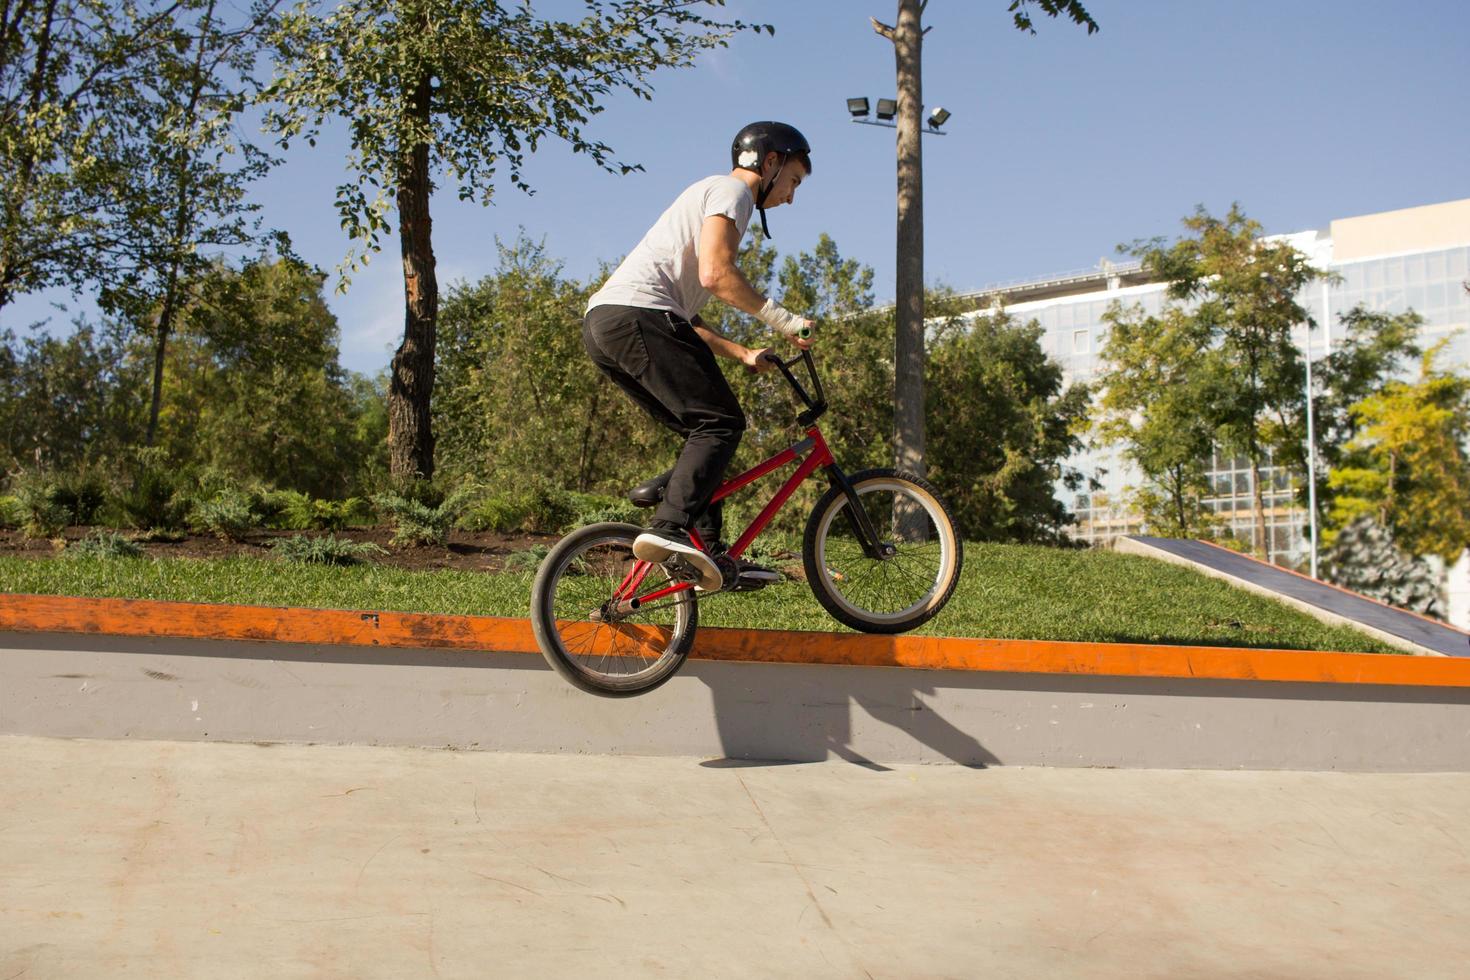 BMX rider training and do tricks in street plaza, bicyxle stunt rider in cocncrete skatepark photo